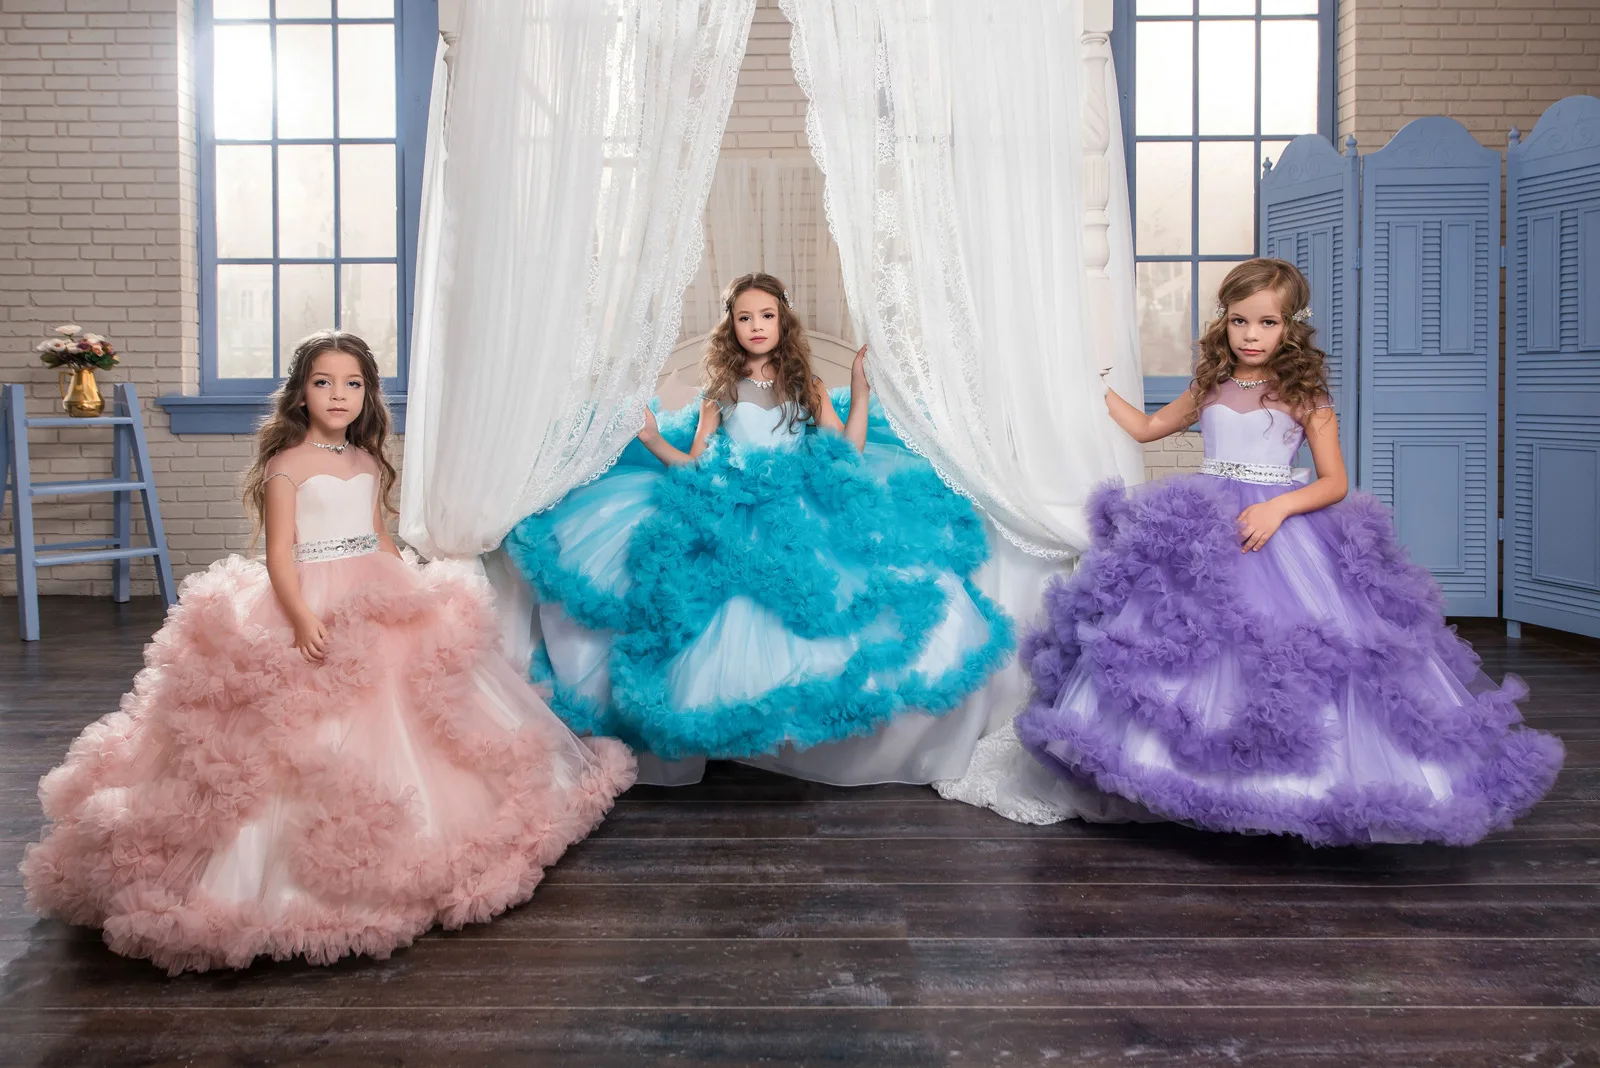 Oath humor coil Pentru Fete rochie de la 10 la 12 ani nunta adolescent haine copii, Rochii  de petrecere roz rochie lunga eleganta de bal rochii de seara pentru fata \  Haine fete > Noulsite.ro